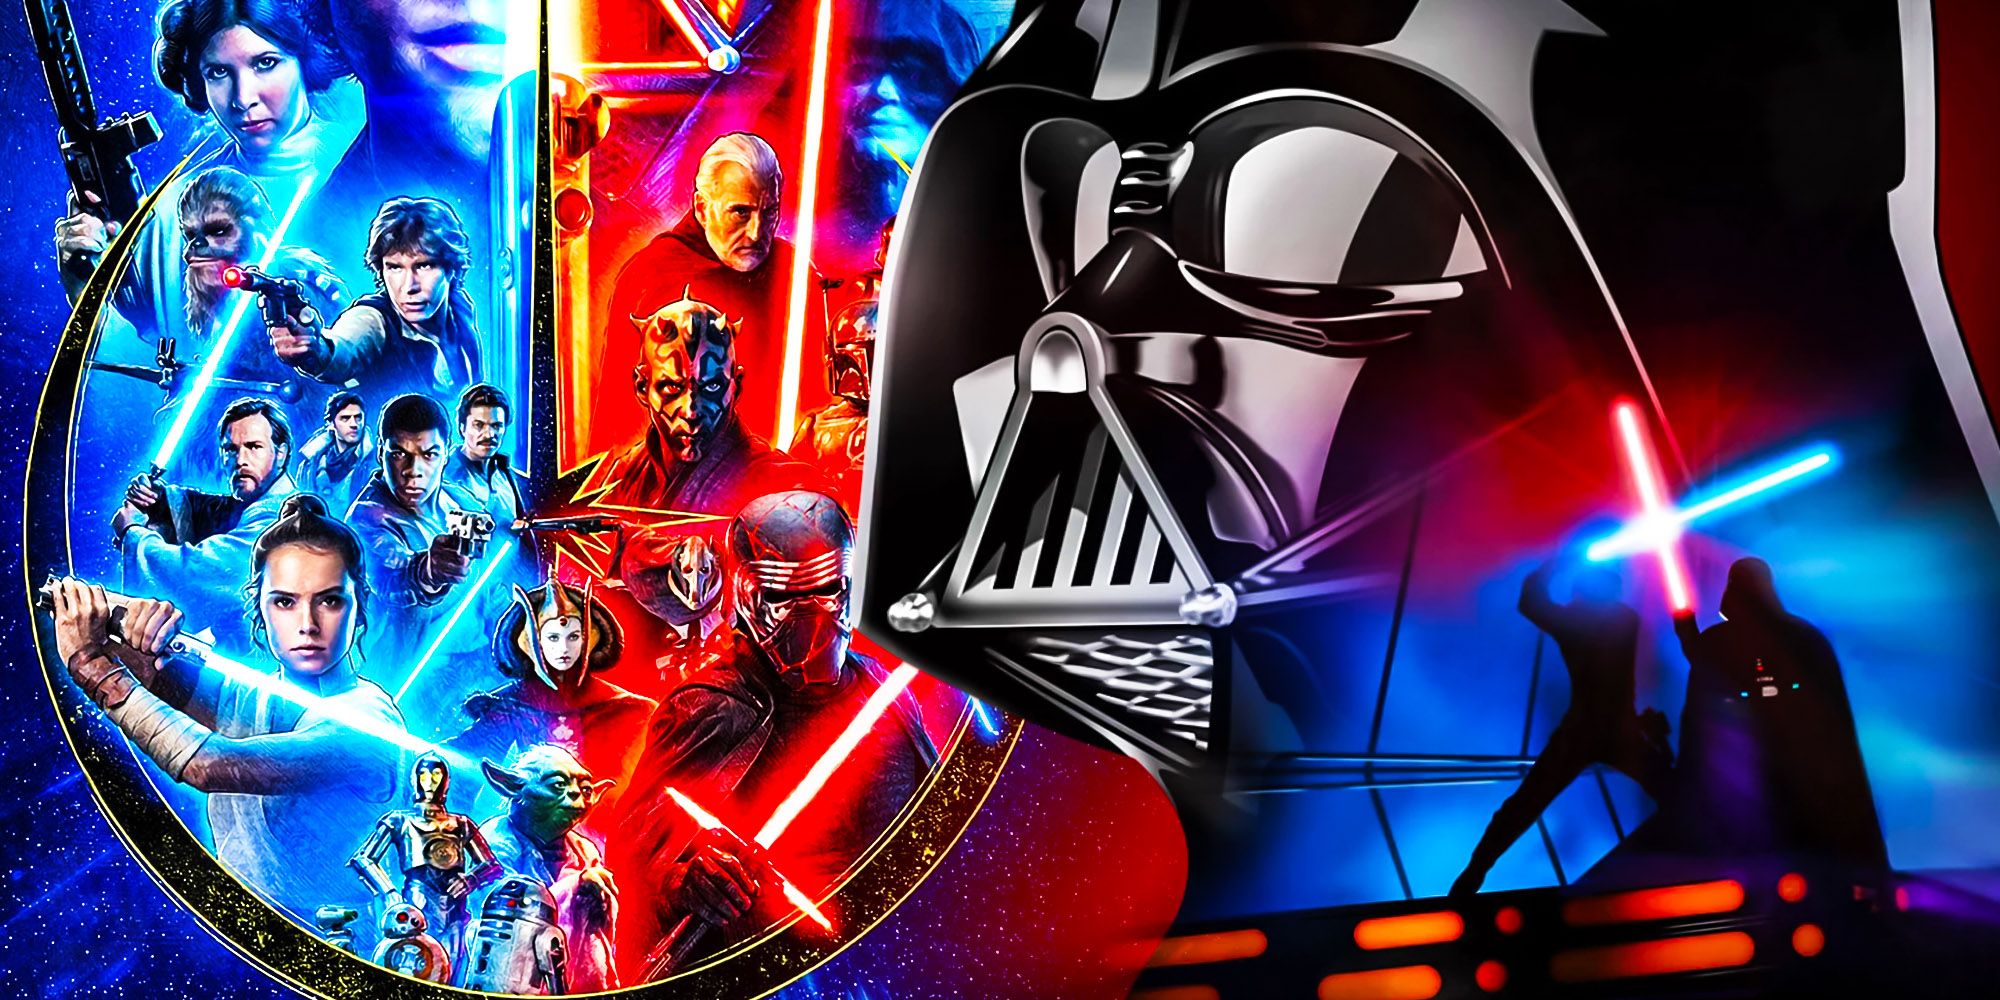 Star wars best trilogy Darth Vader